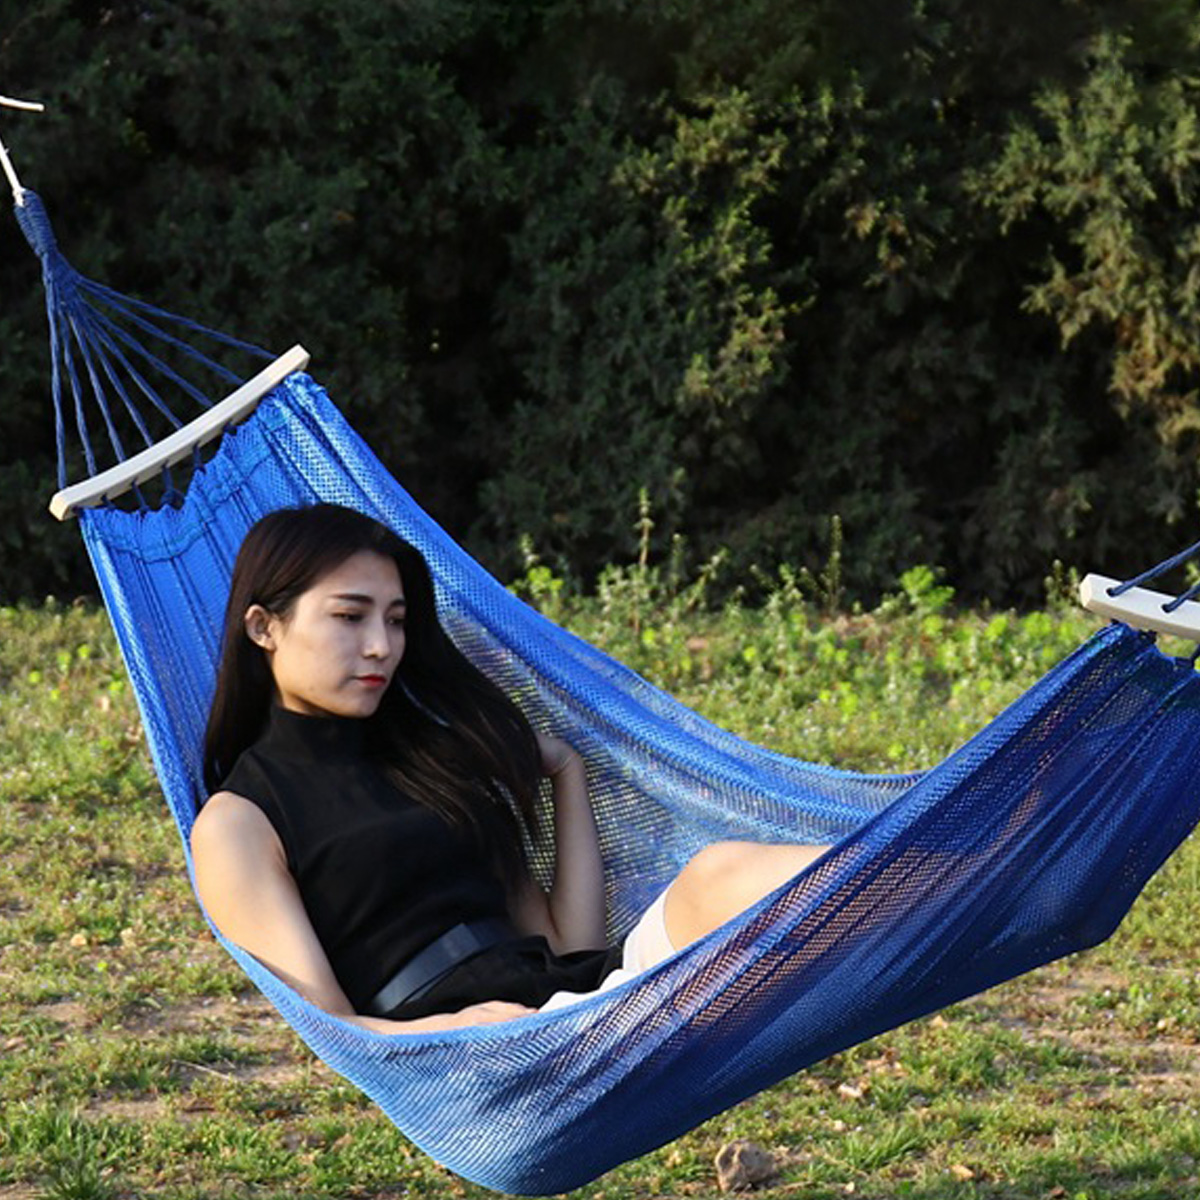 Portable-Hammocks-Single-People-Leisure-Sleeping-Hamaca-Hanging-Bed-Camping-Travel-1872332-7